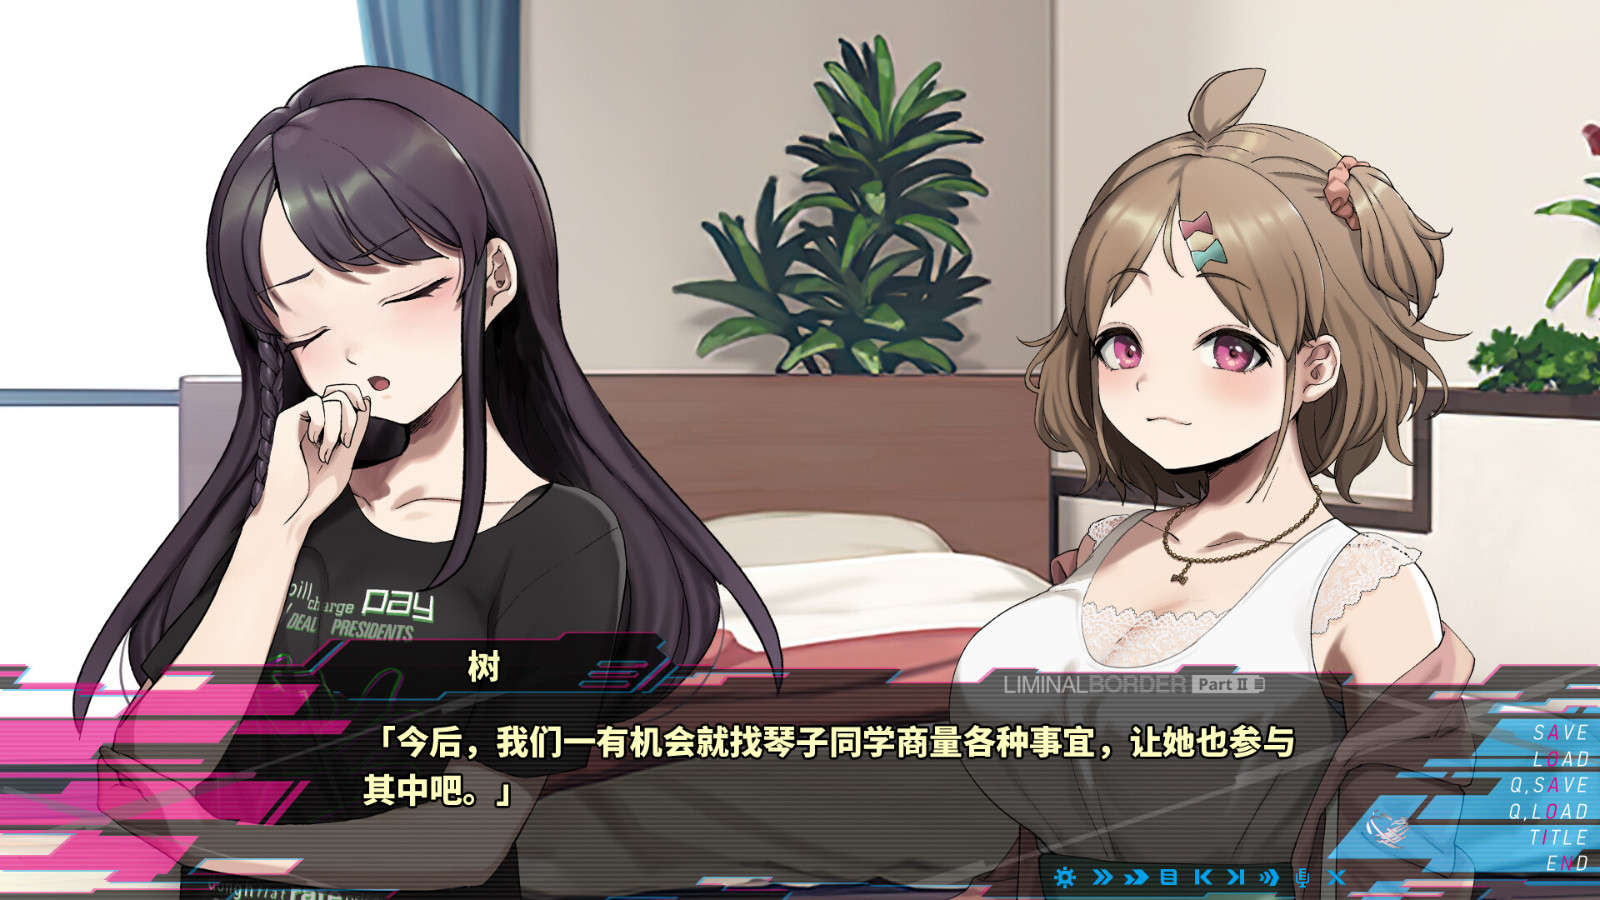 《Liminal Border Part II》Steam页面上线 反对于简繁体中文